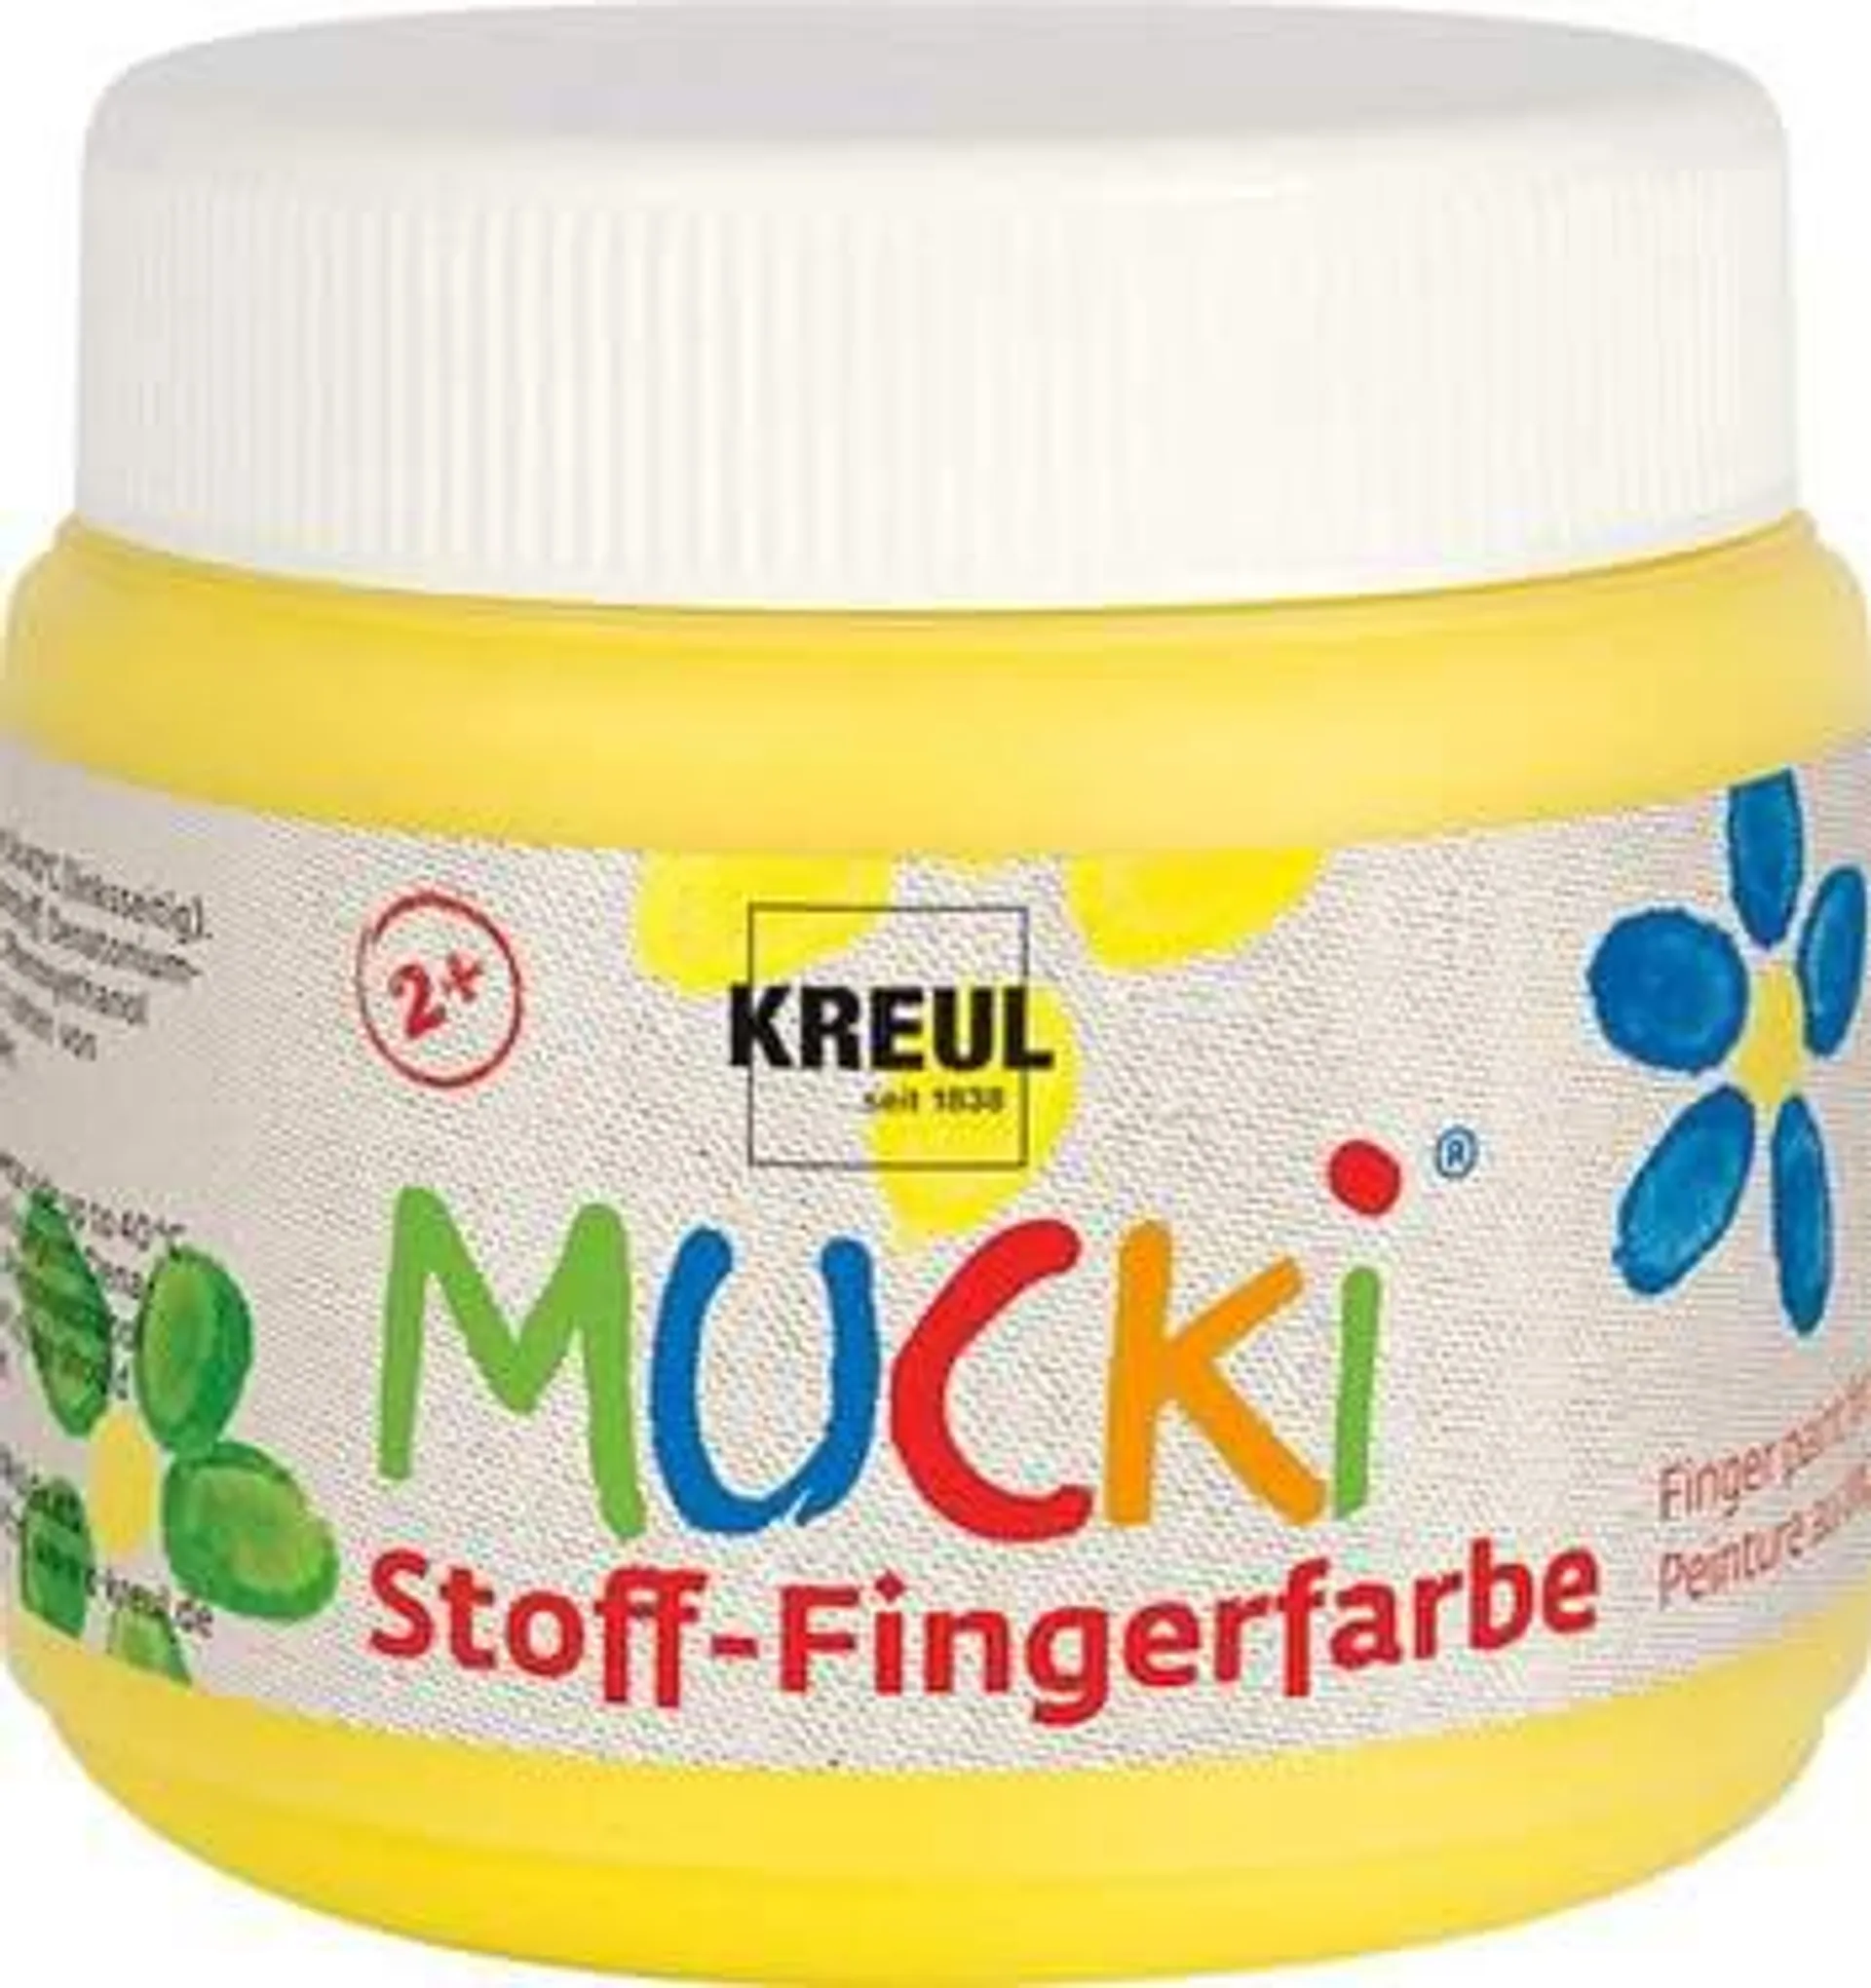 MUCKI Stoff-Fingerfarbe Gelb 150 ml